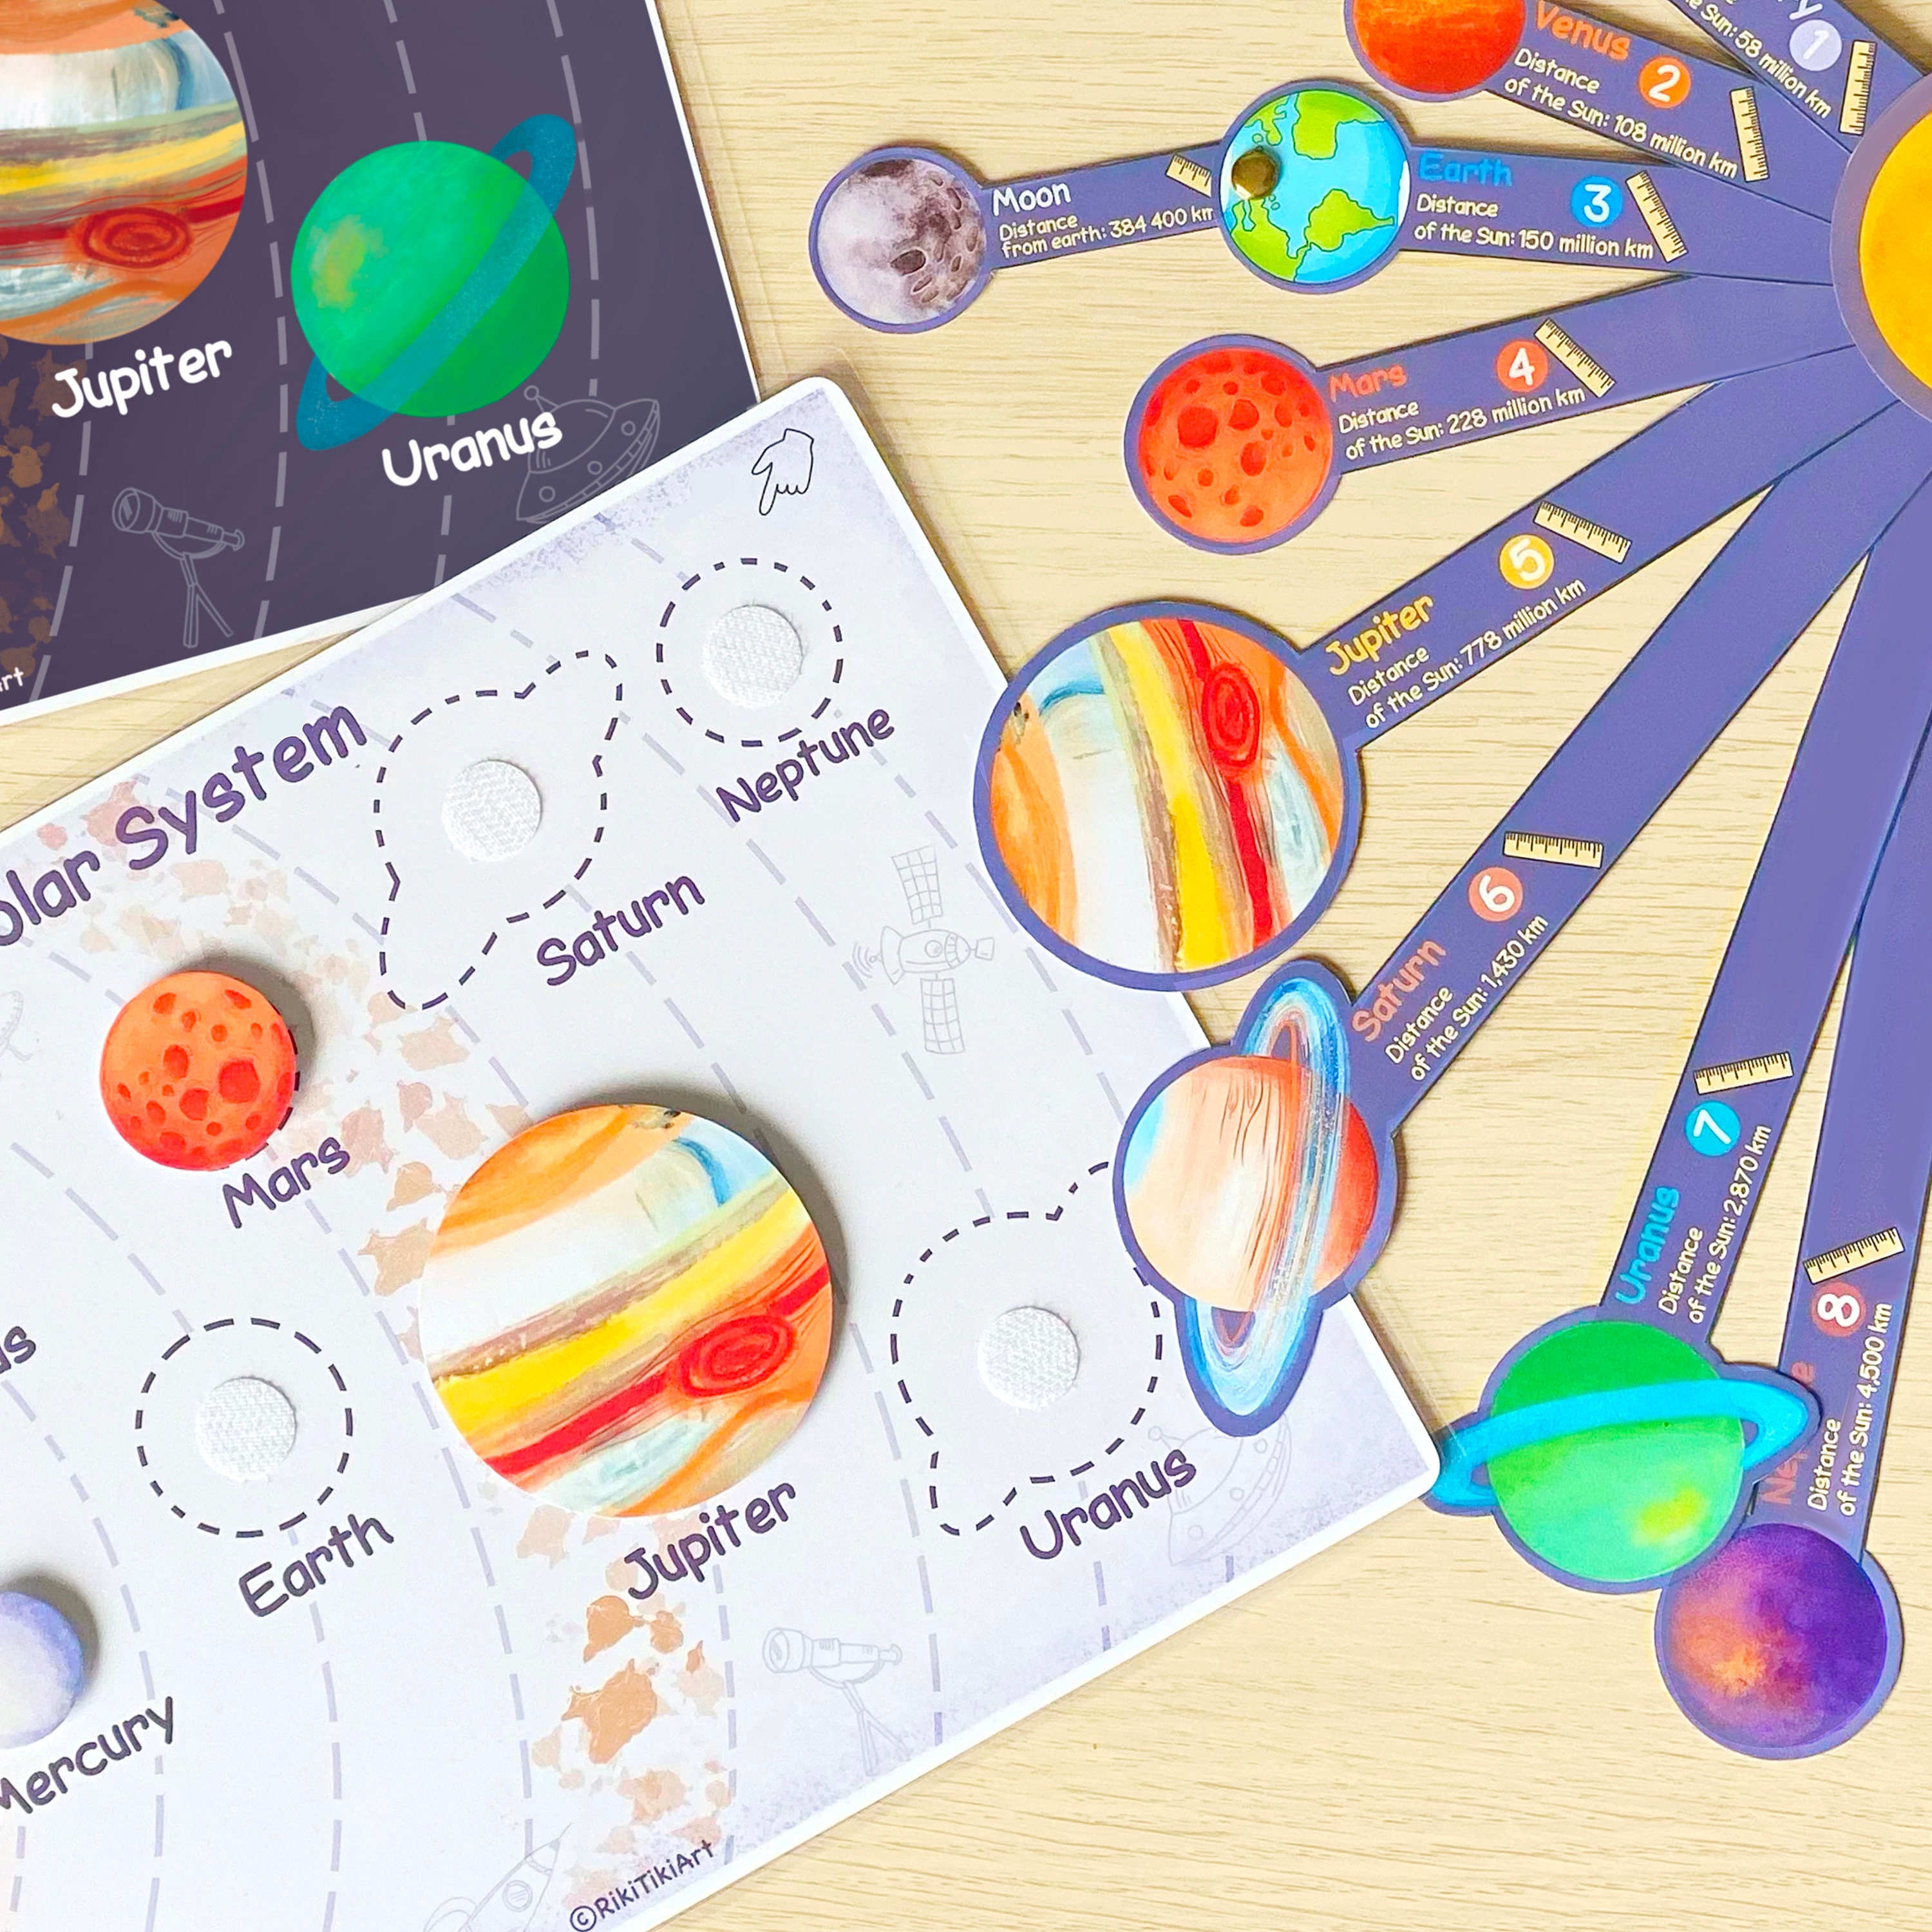 Solar System Model for Kids (Printable Templates) • Kids Activities Blog